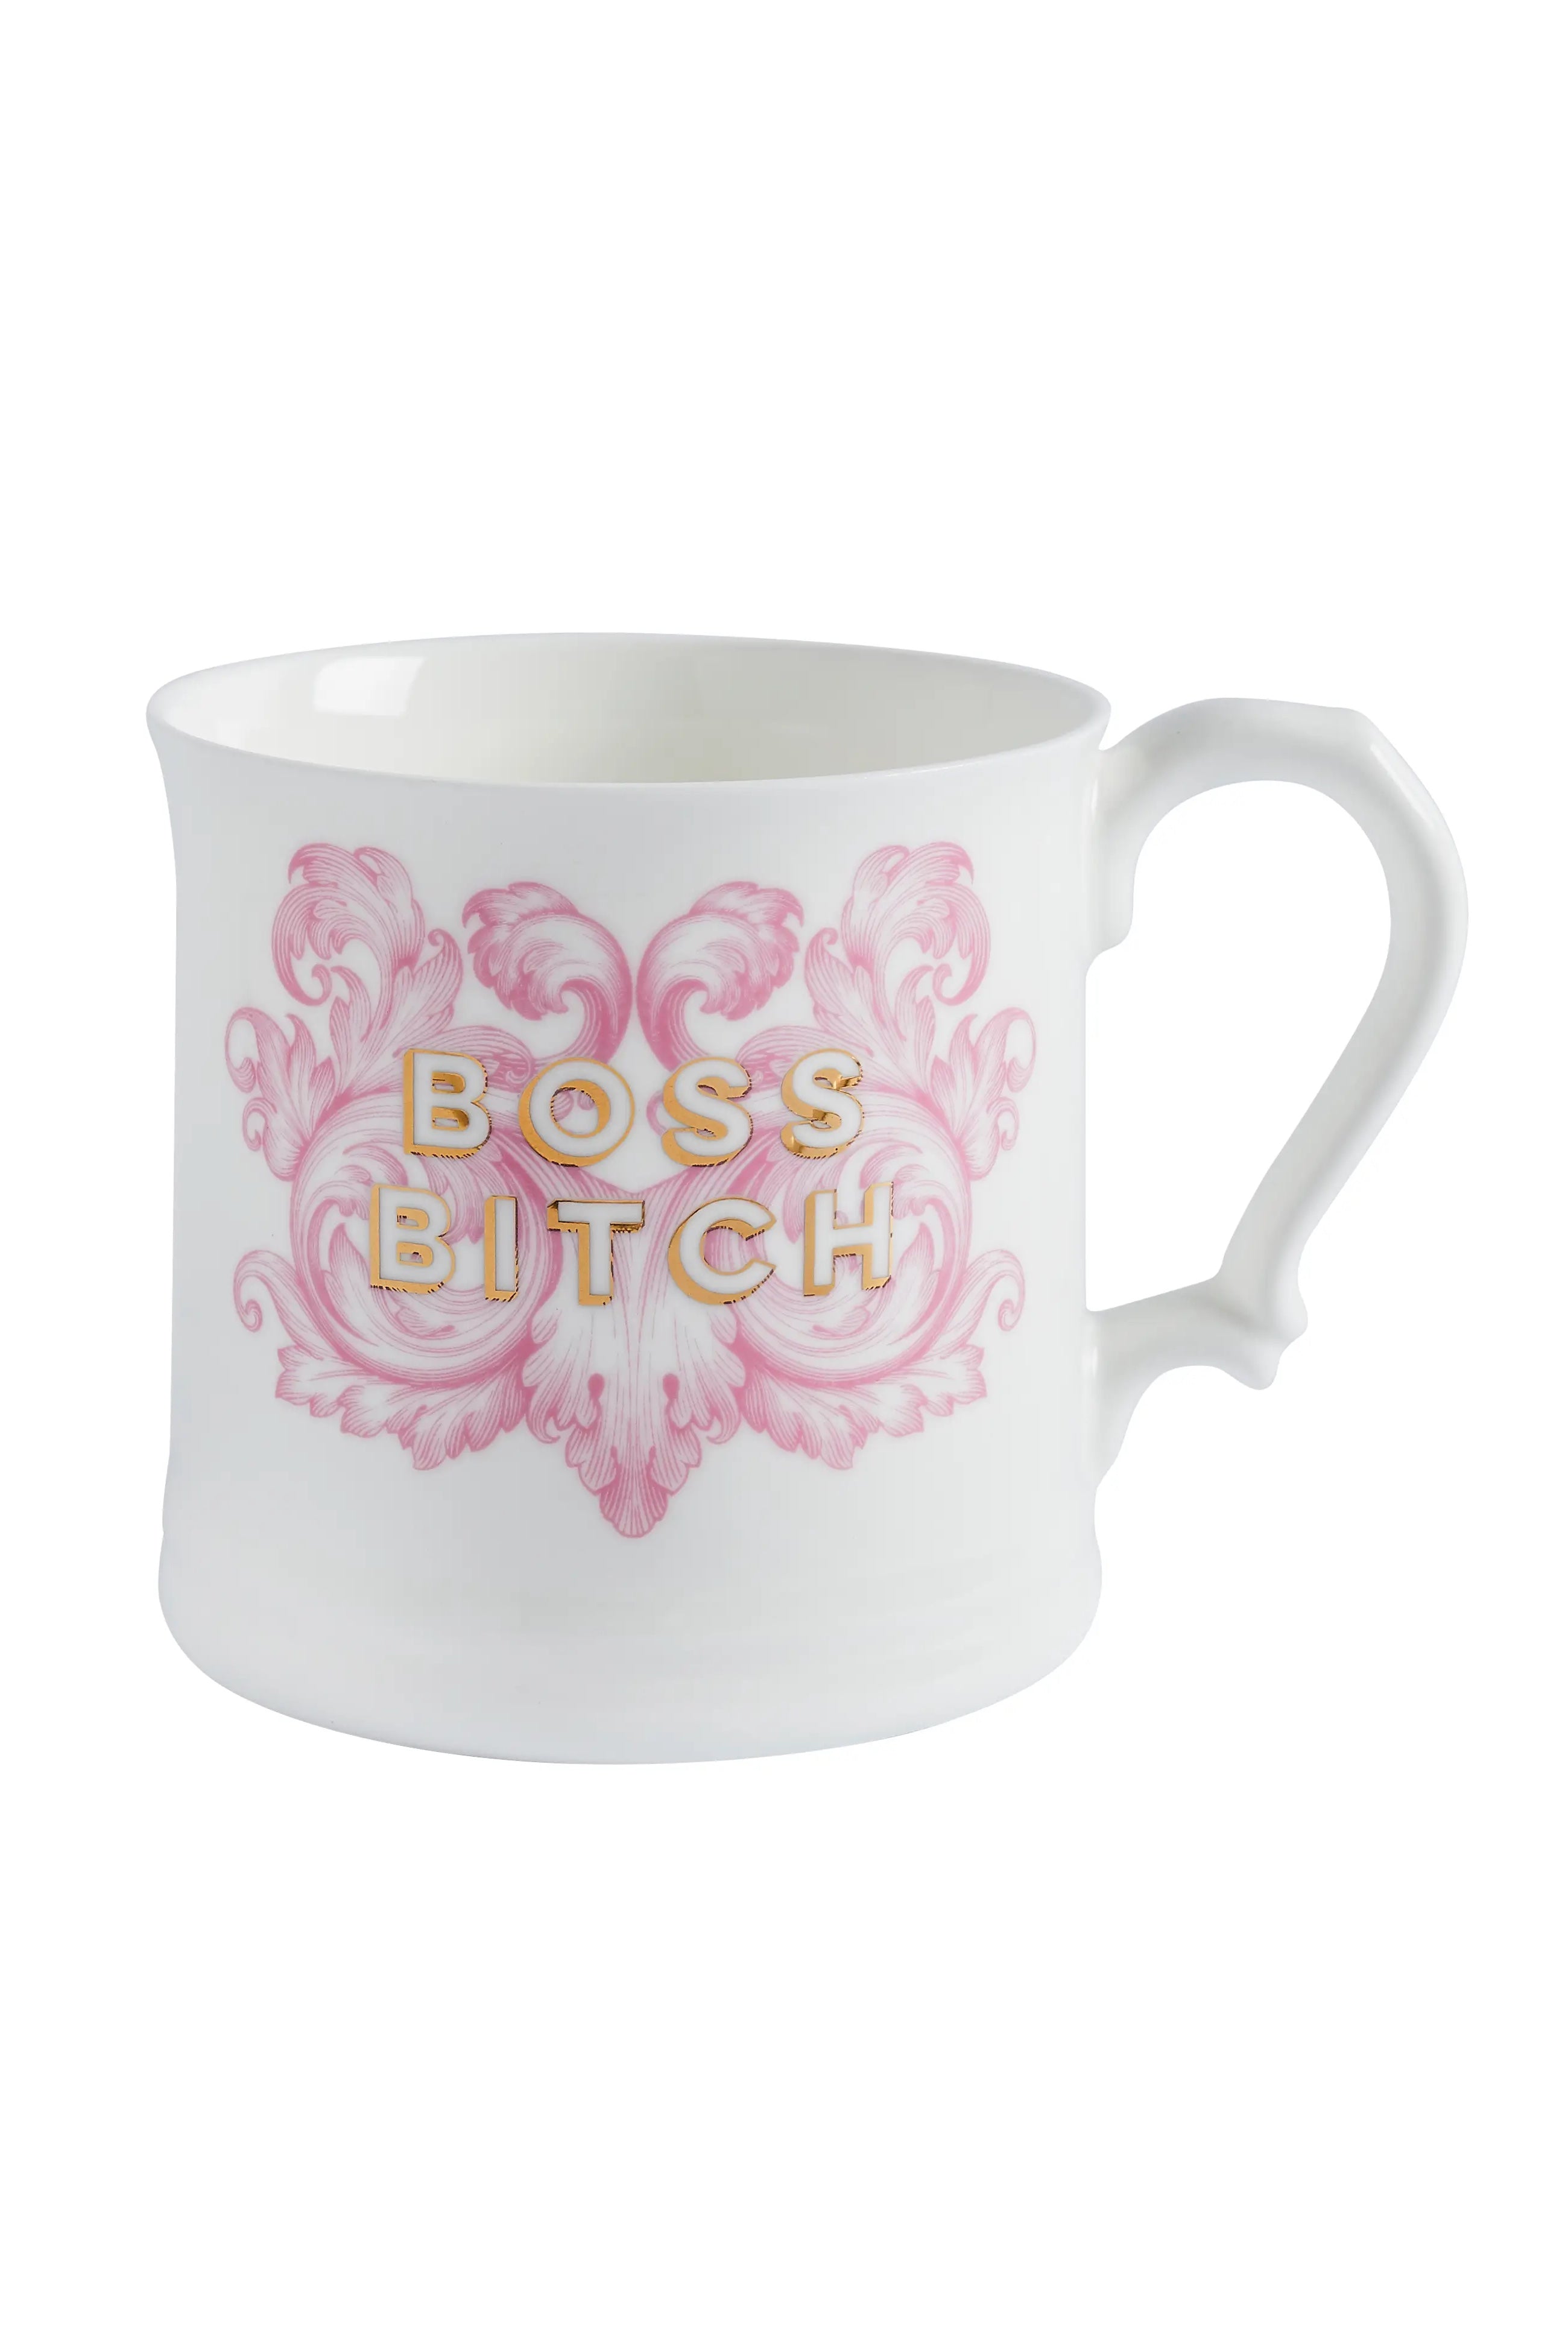 Bad Bitch Club - White 10oz Porcelain Slim Mug – Bad Mum Designs